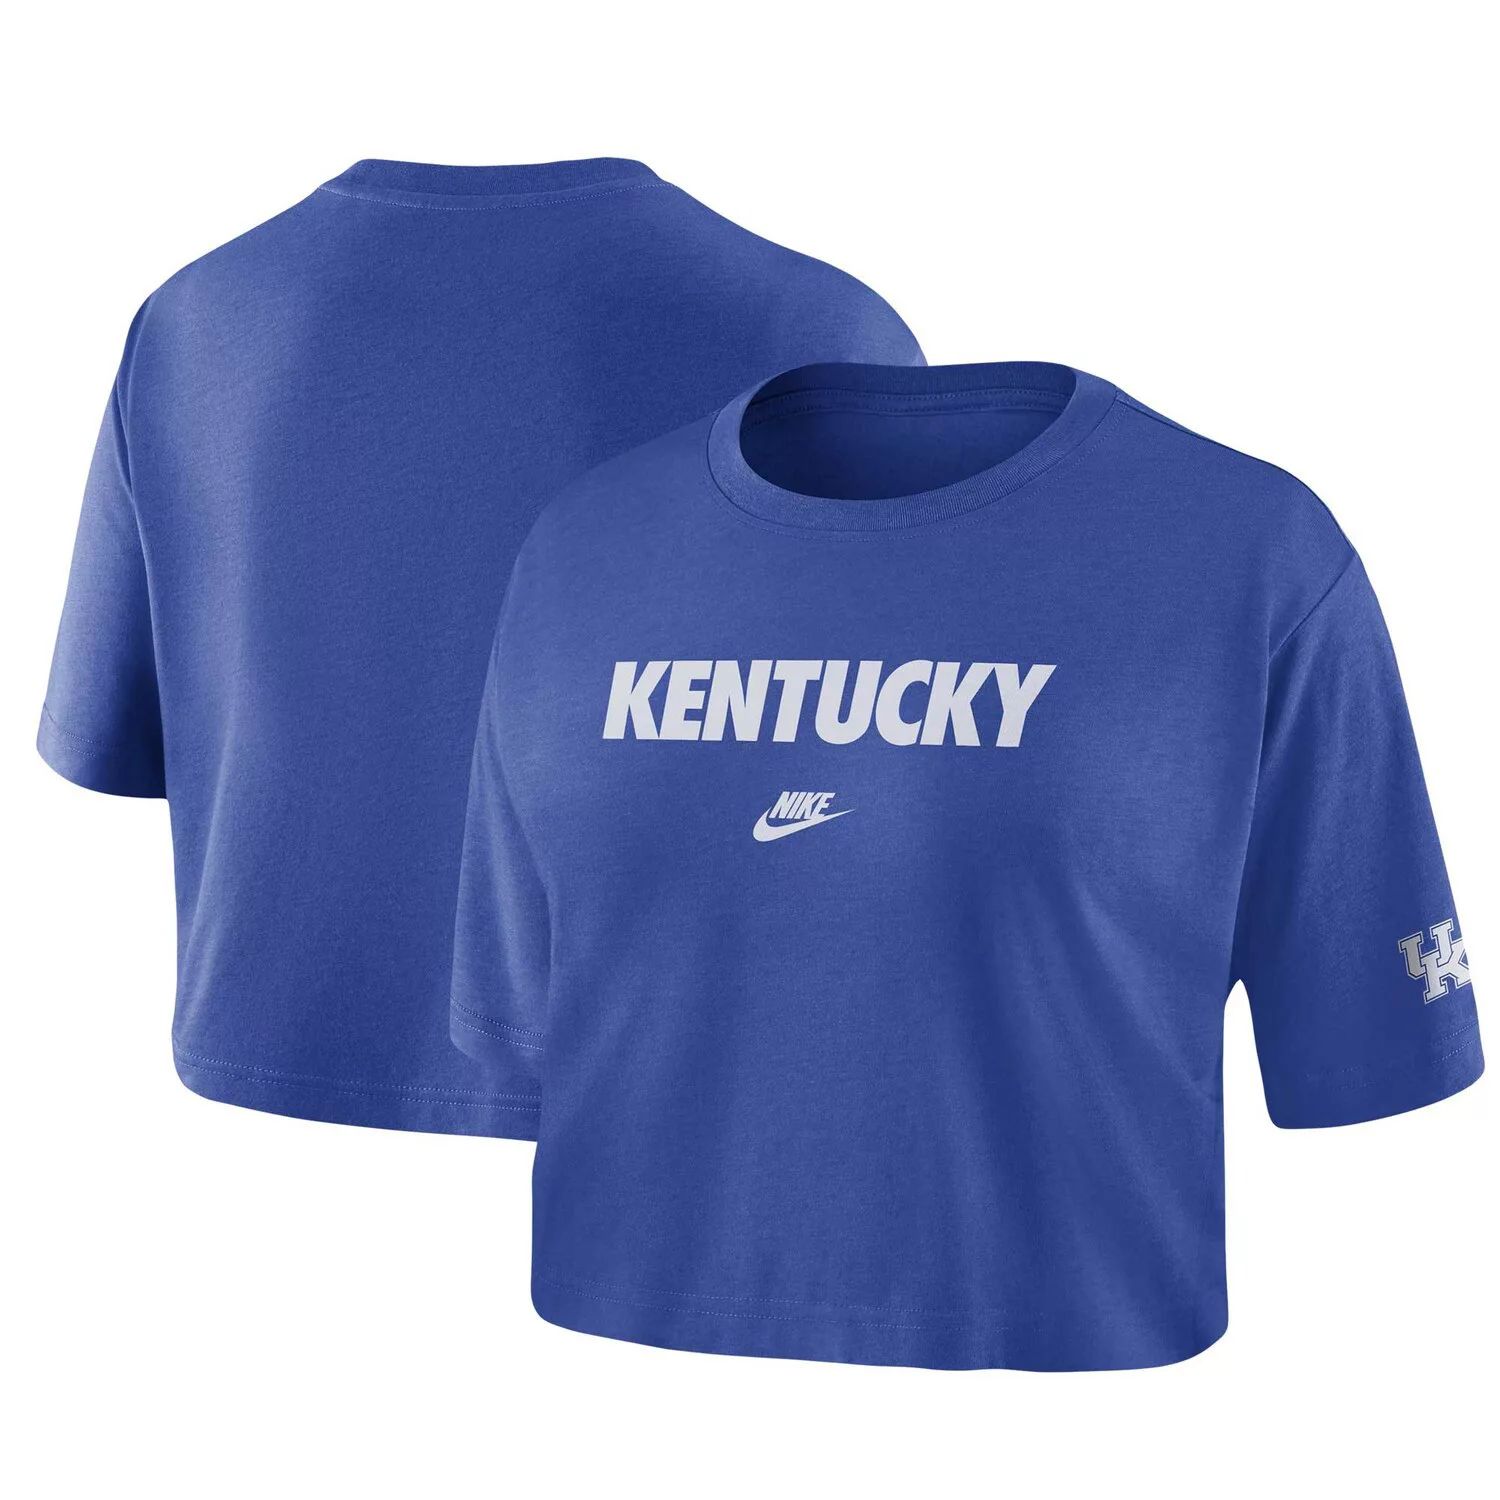 Женская укороченная футболка Nike Royal Kentucky Wildcats с надписью Nike